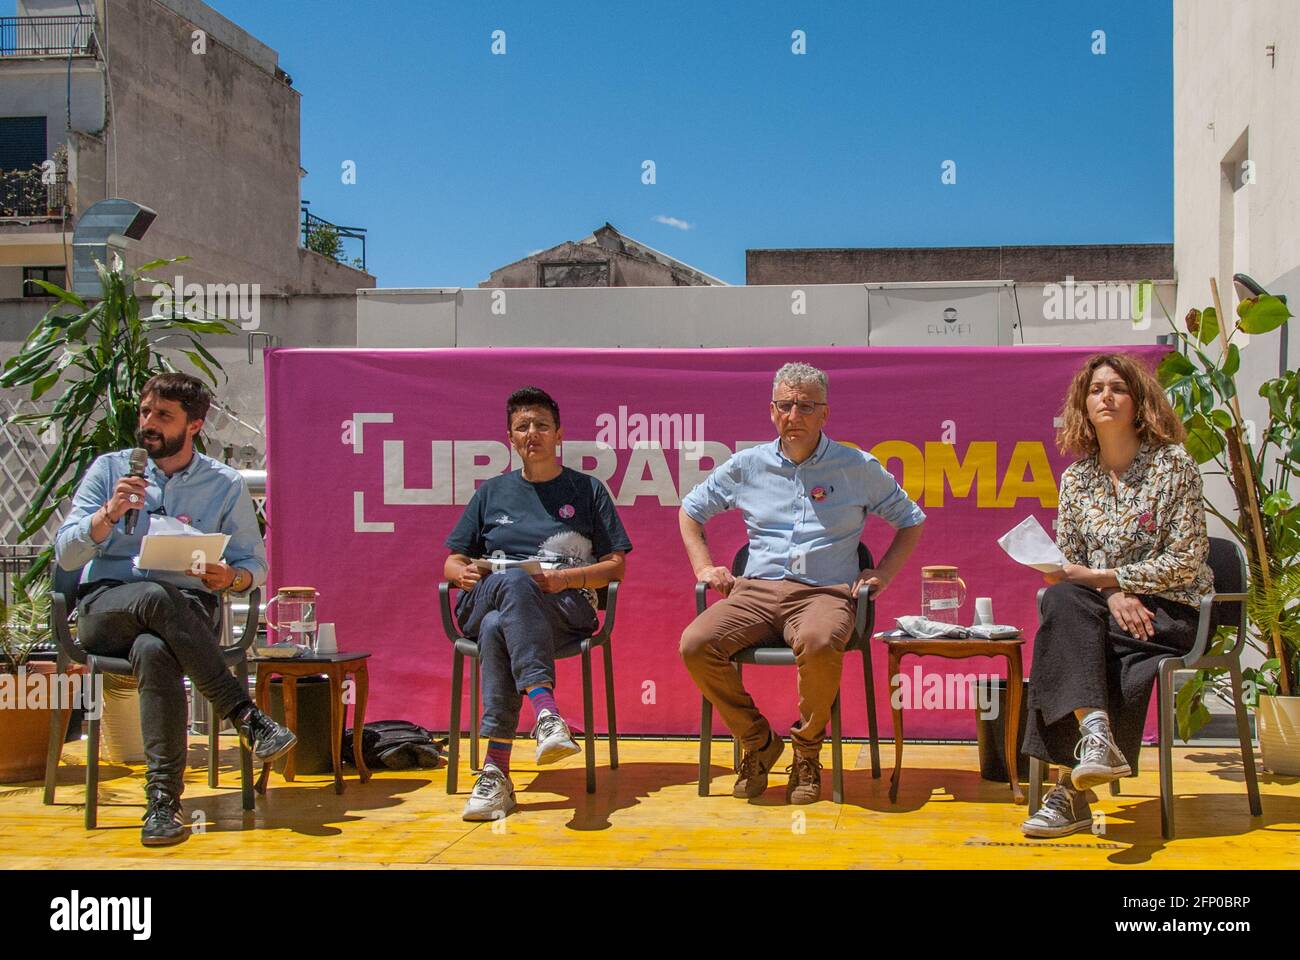 The leader of the LGBTQI movement runs for the center-left primaries. The presentation with Massimiliano Smeriglio, Amedeo Ciaccheri, Tatiana Marchisio. Stock Photo